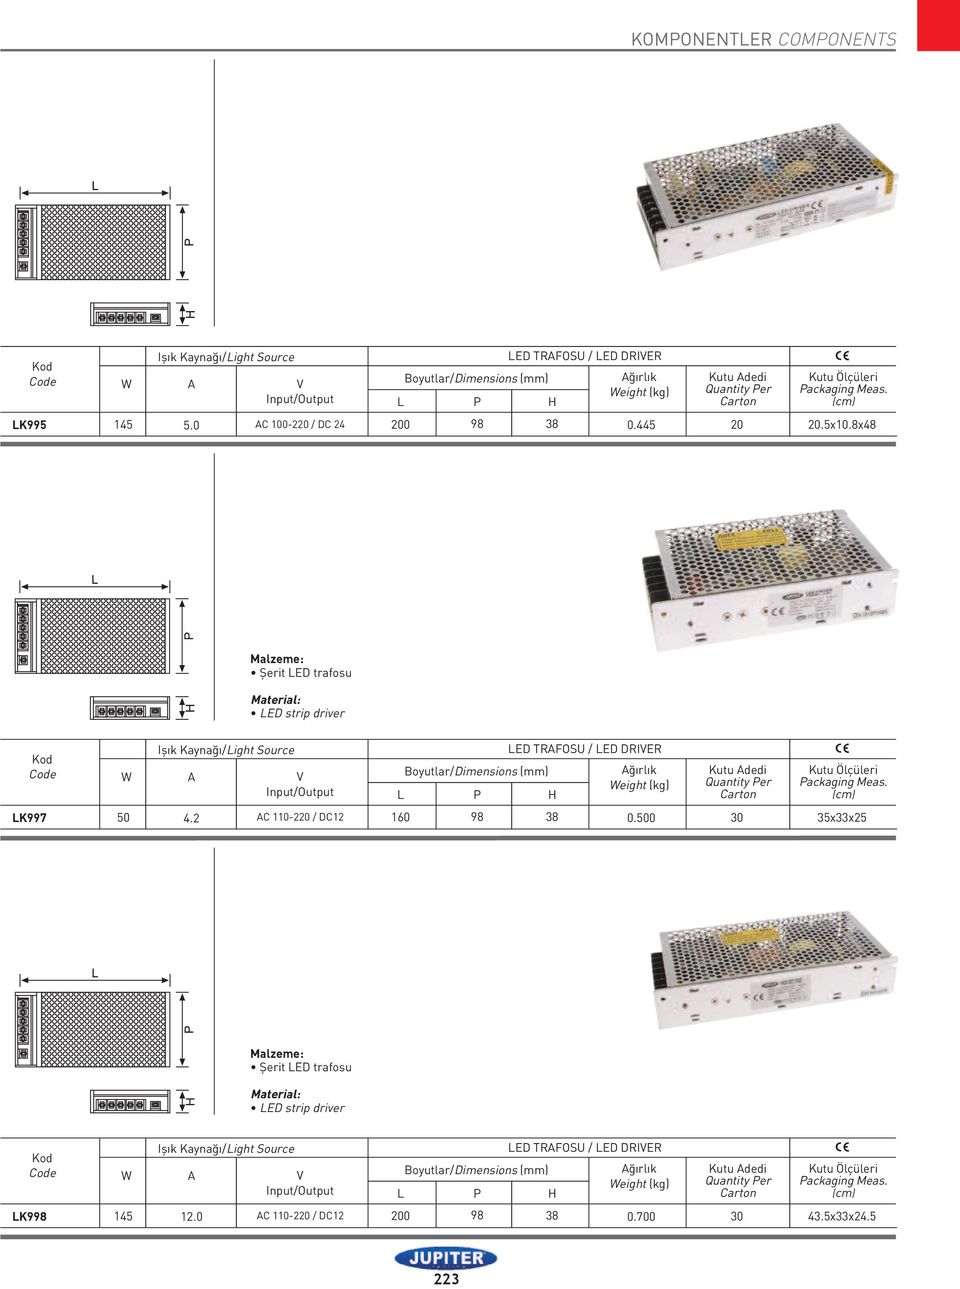 (cm) 200 98 38 0.445 20 20.5x10.8x48 Malzeme: Şerit LED trafosu Material: LED strip driver Kod Code LK997 Işık Kaynağı/Light Source A 50 4.